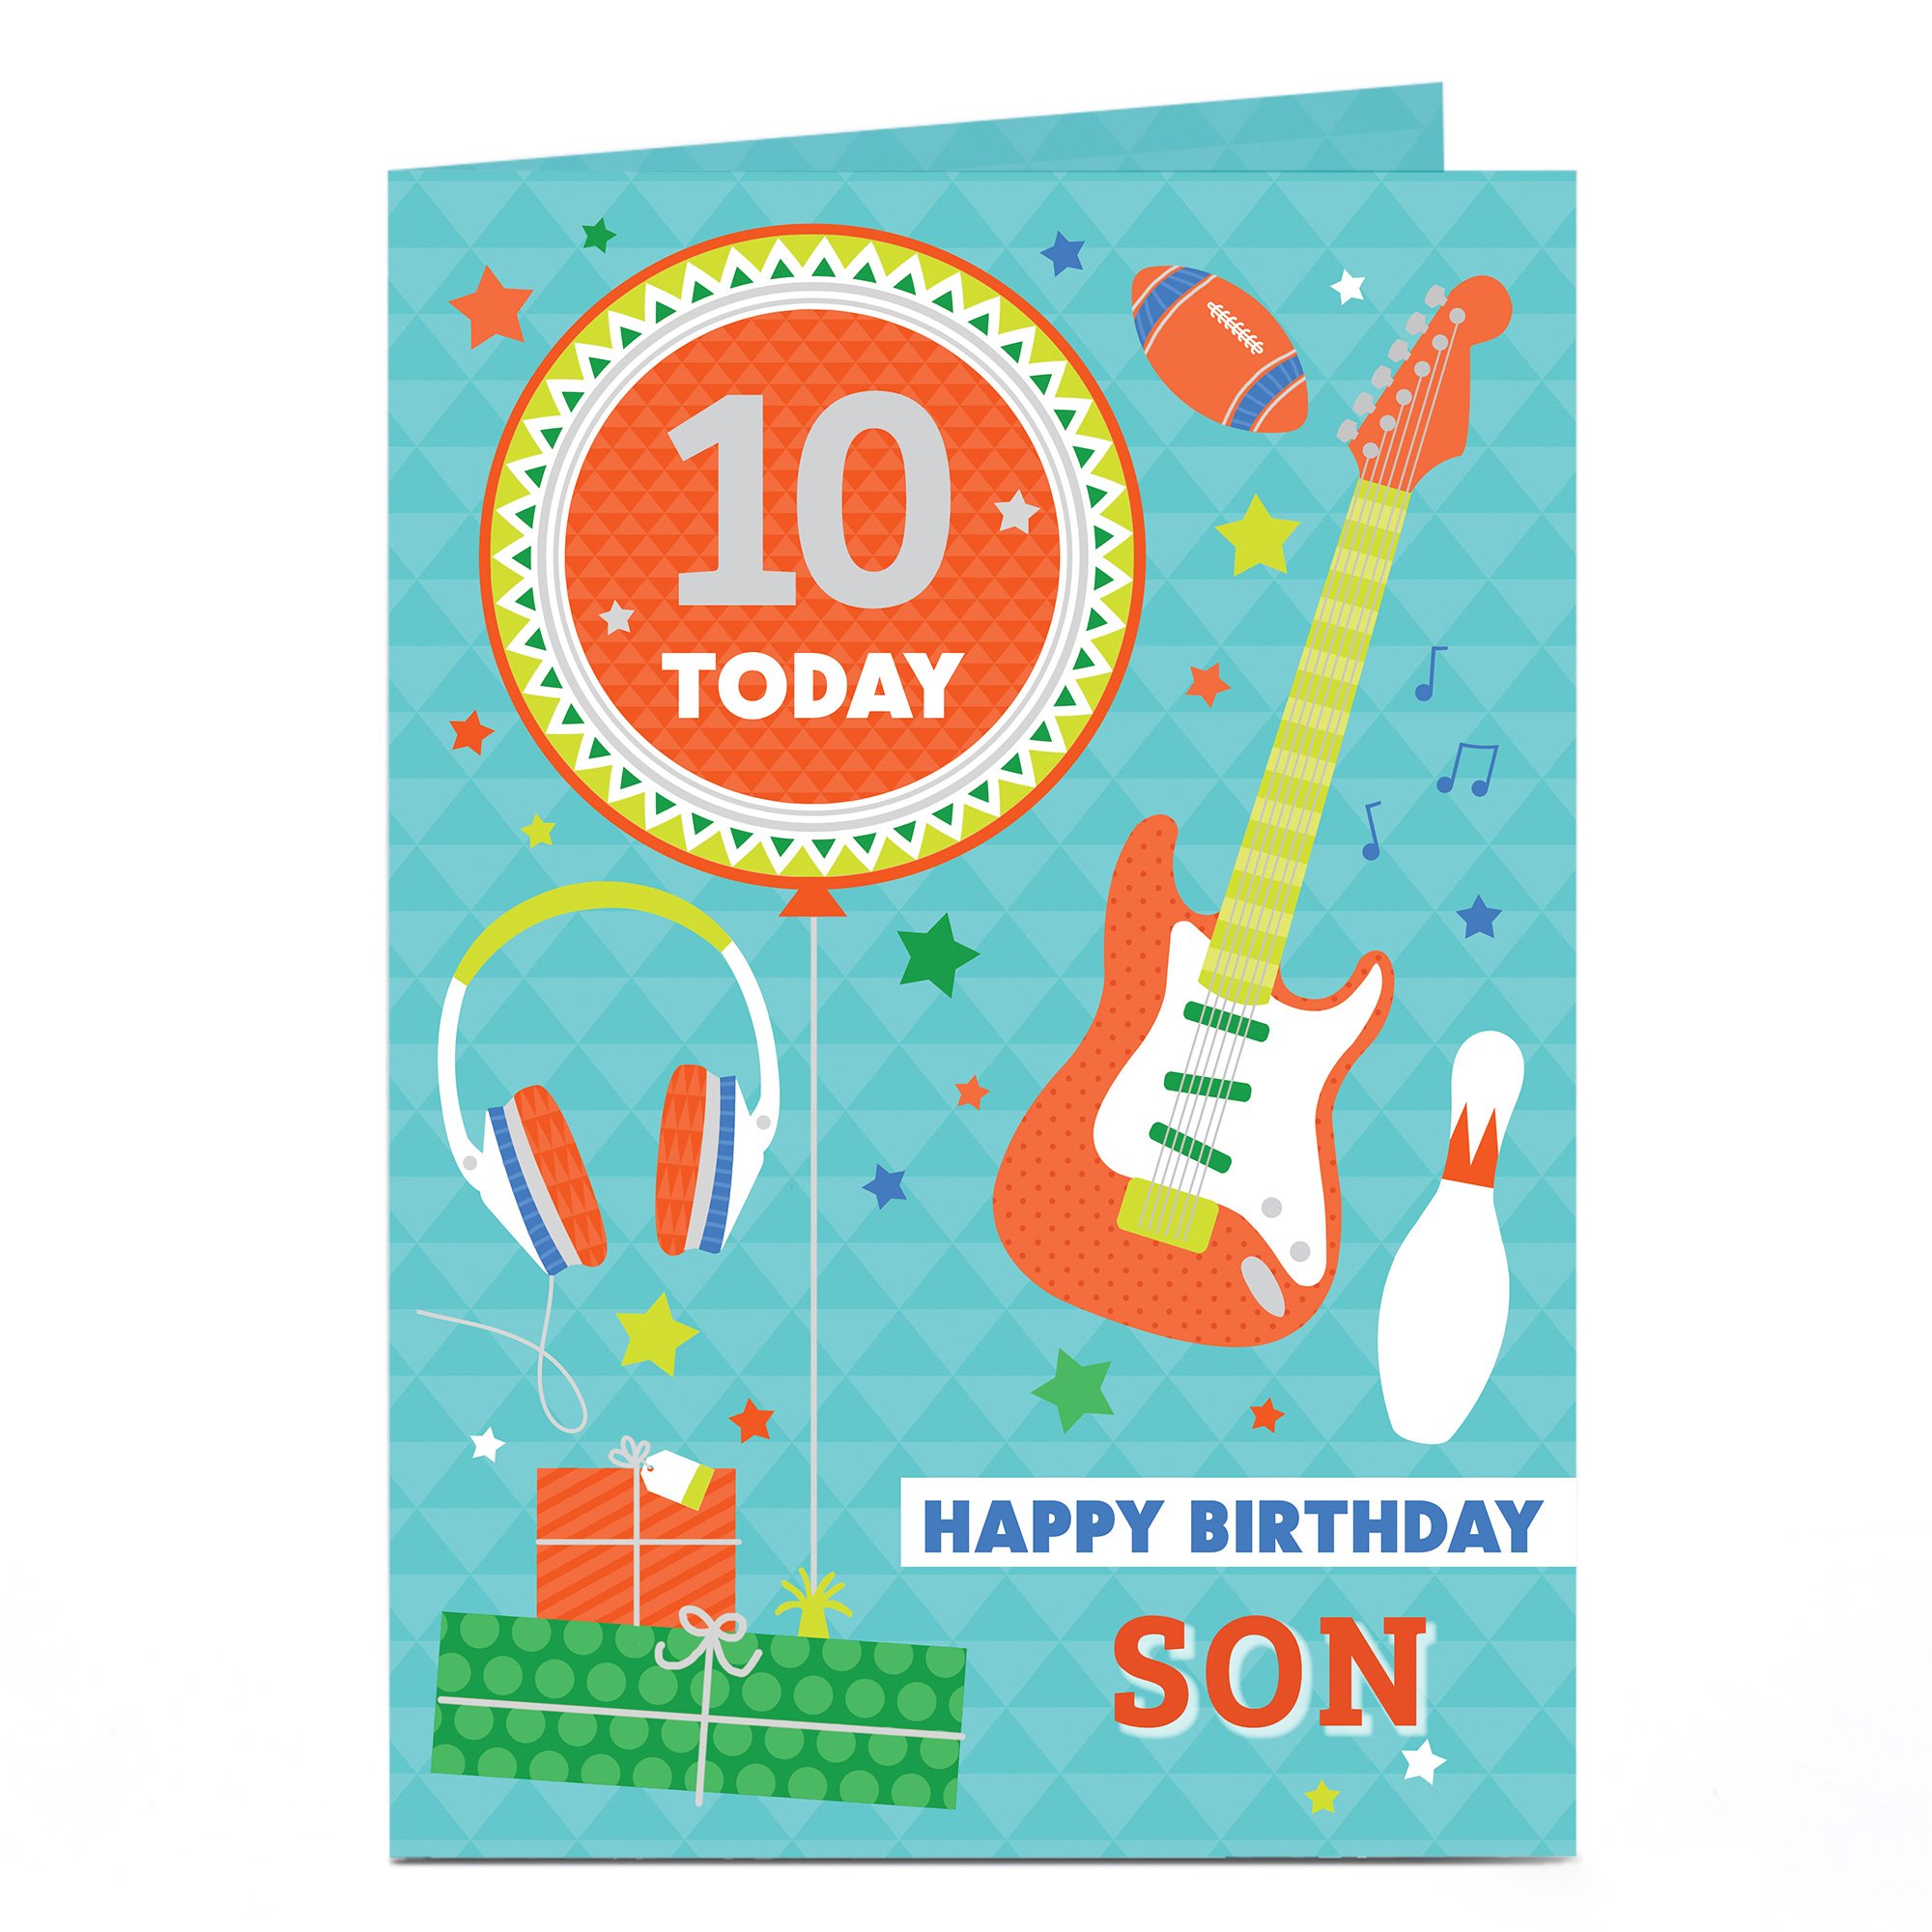 Personalised Editable Age Birthday Card - Guitar & Balloon